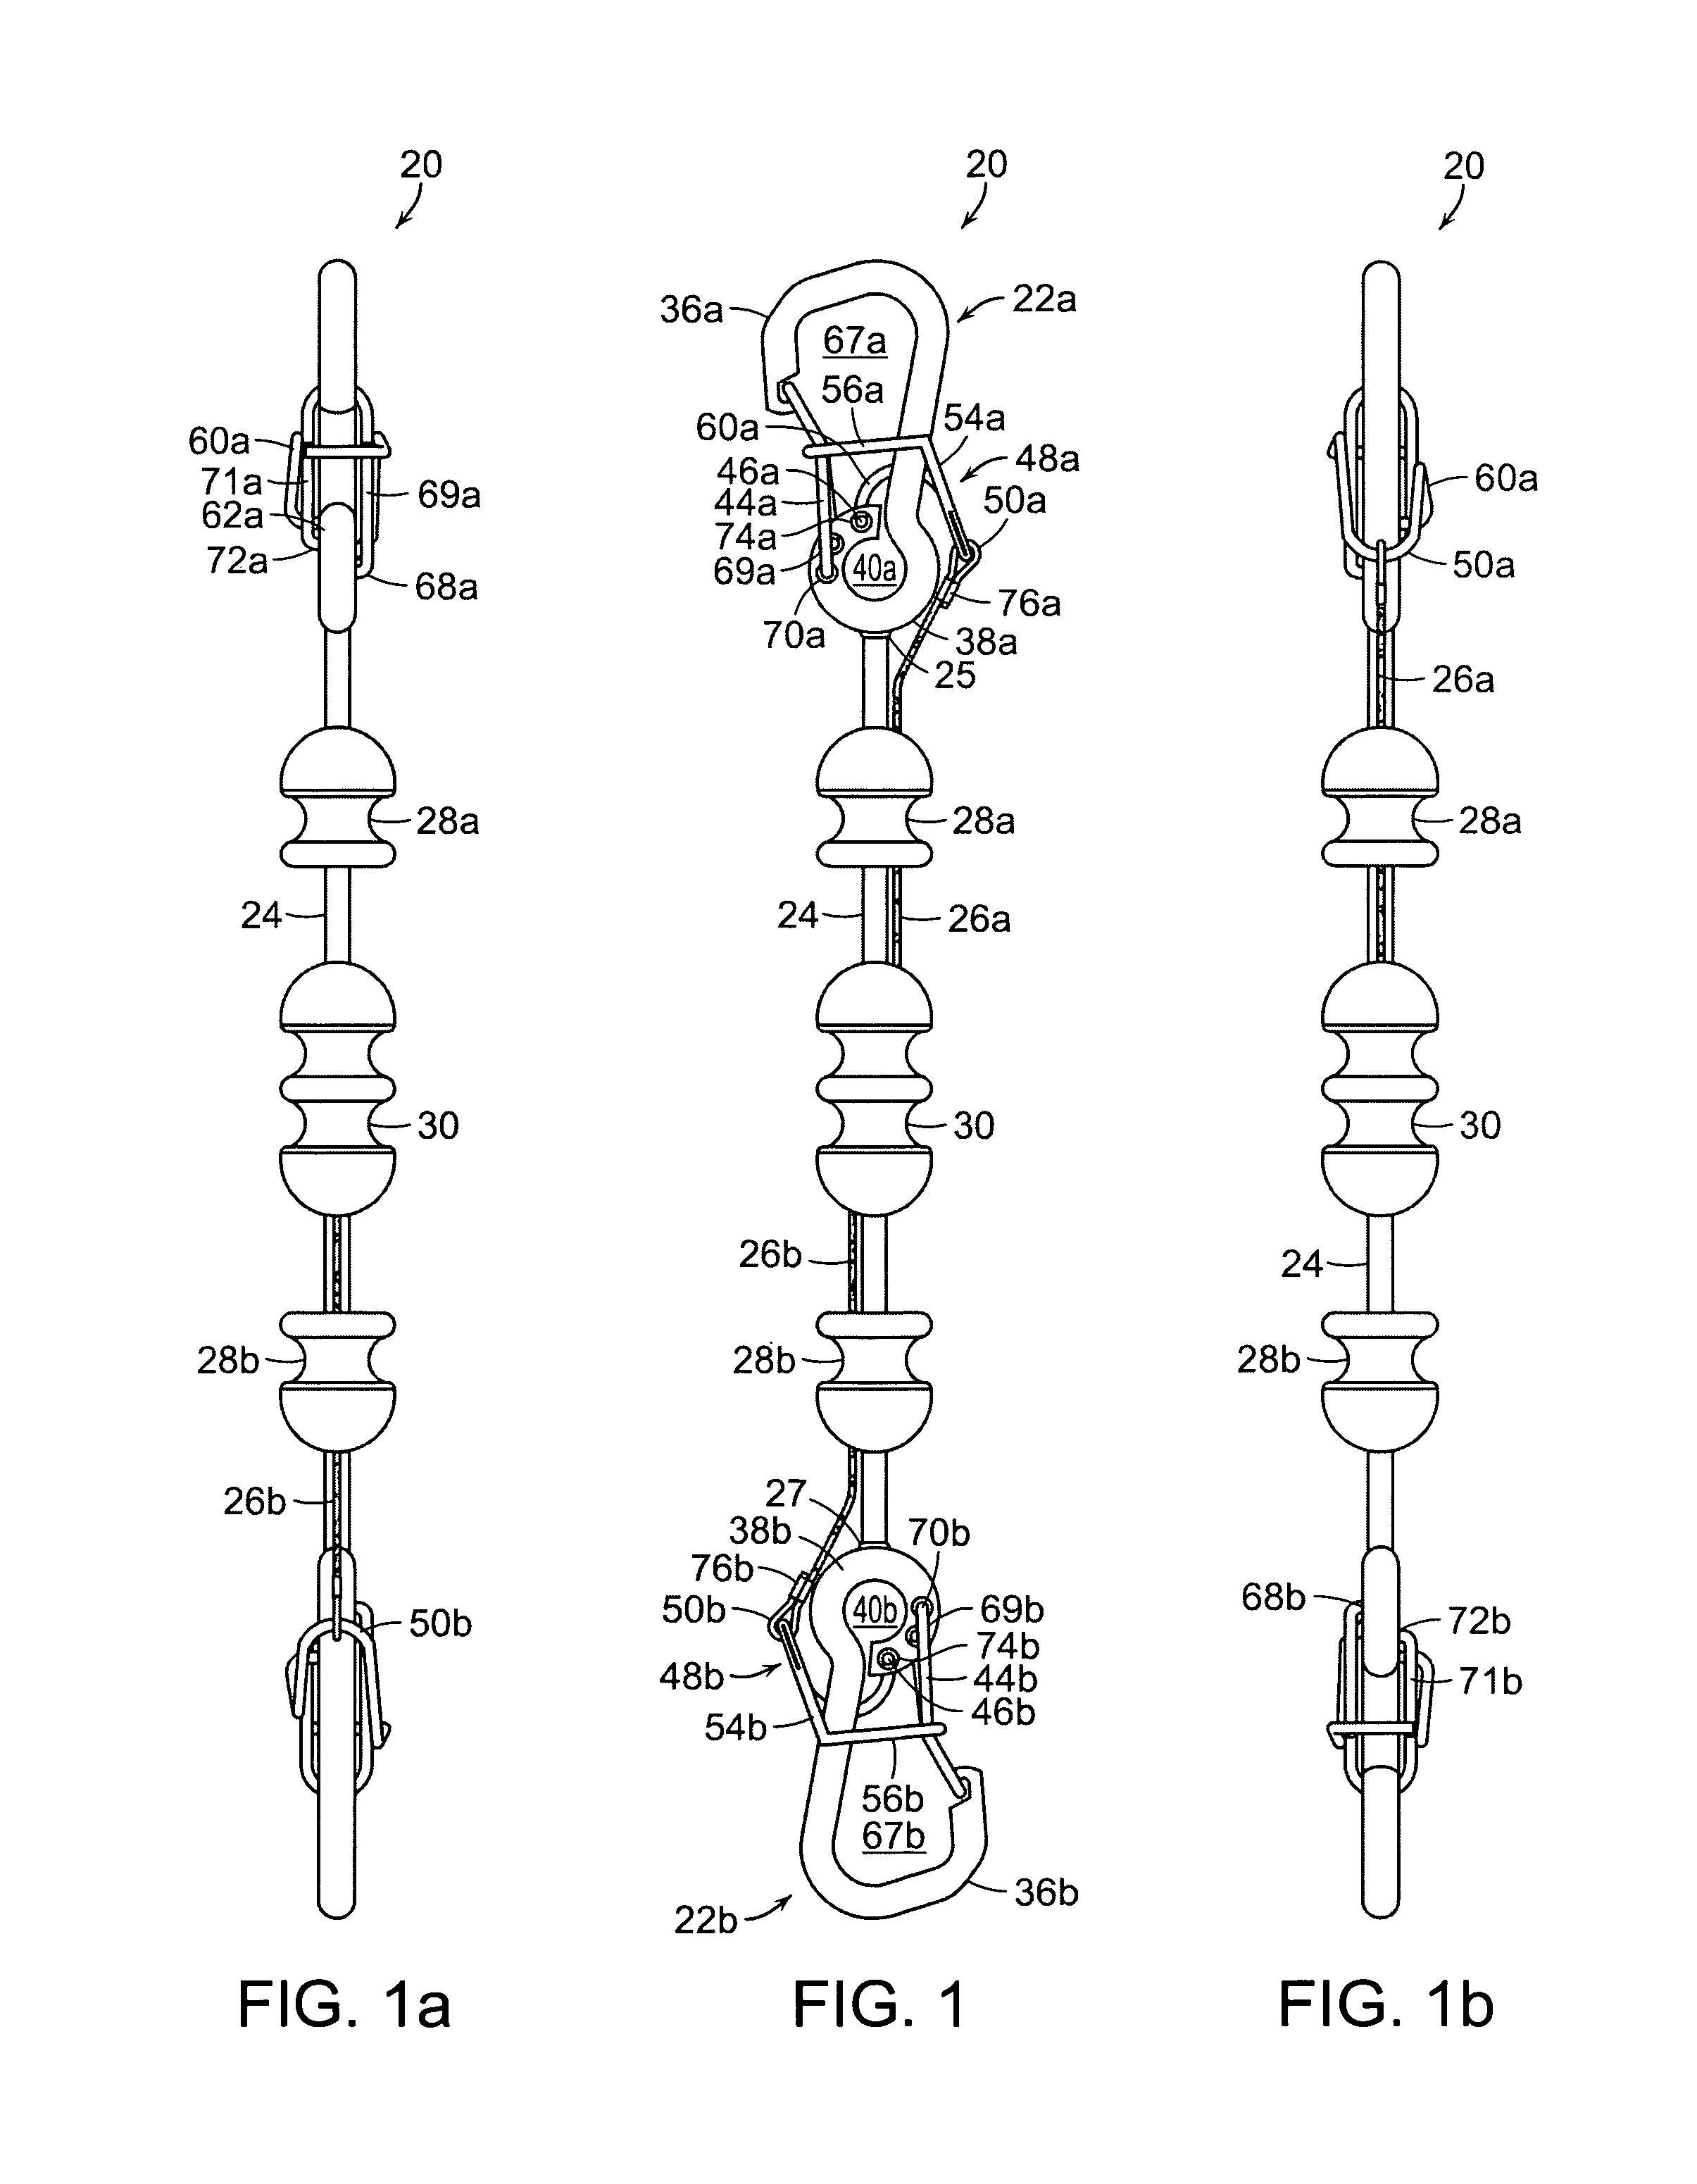 Mooring pendant apparatus